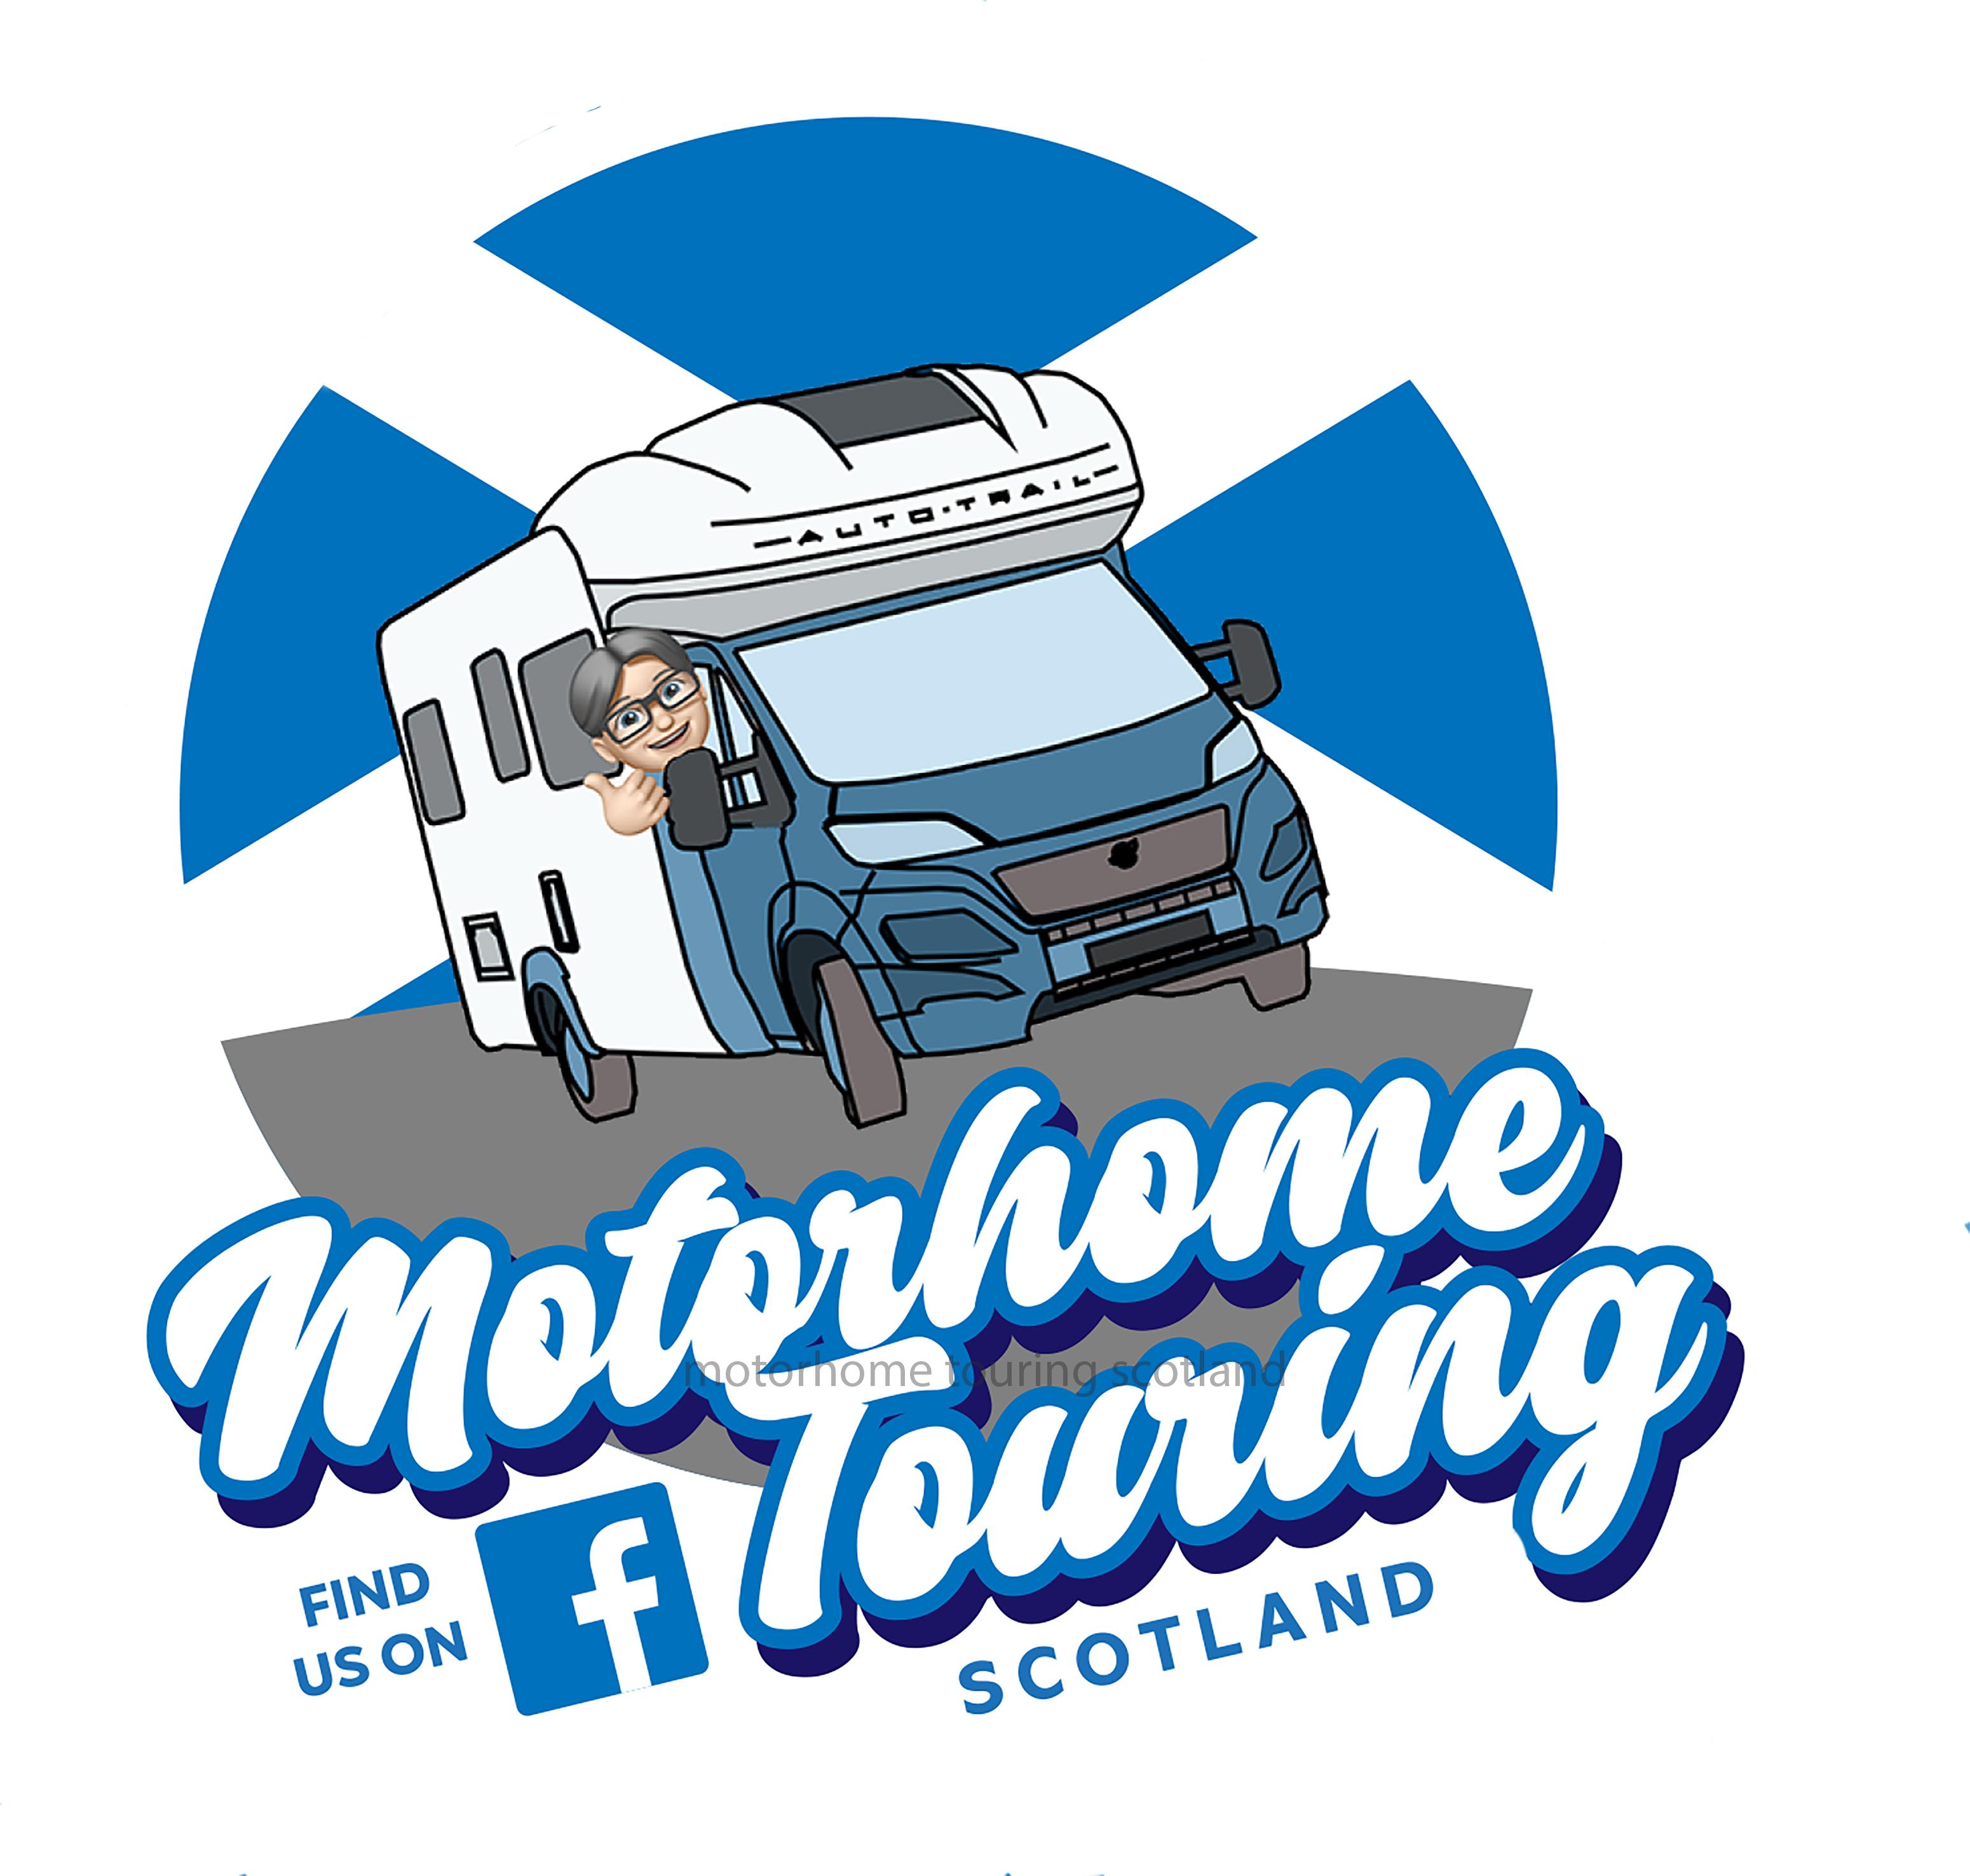 Motorhome Touring Scotland